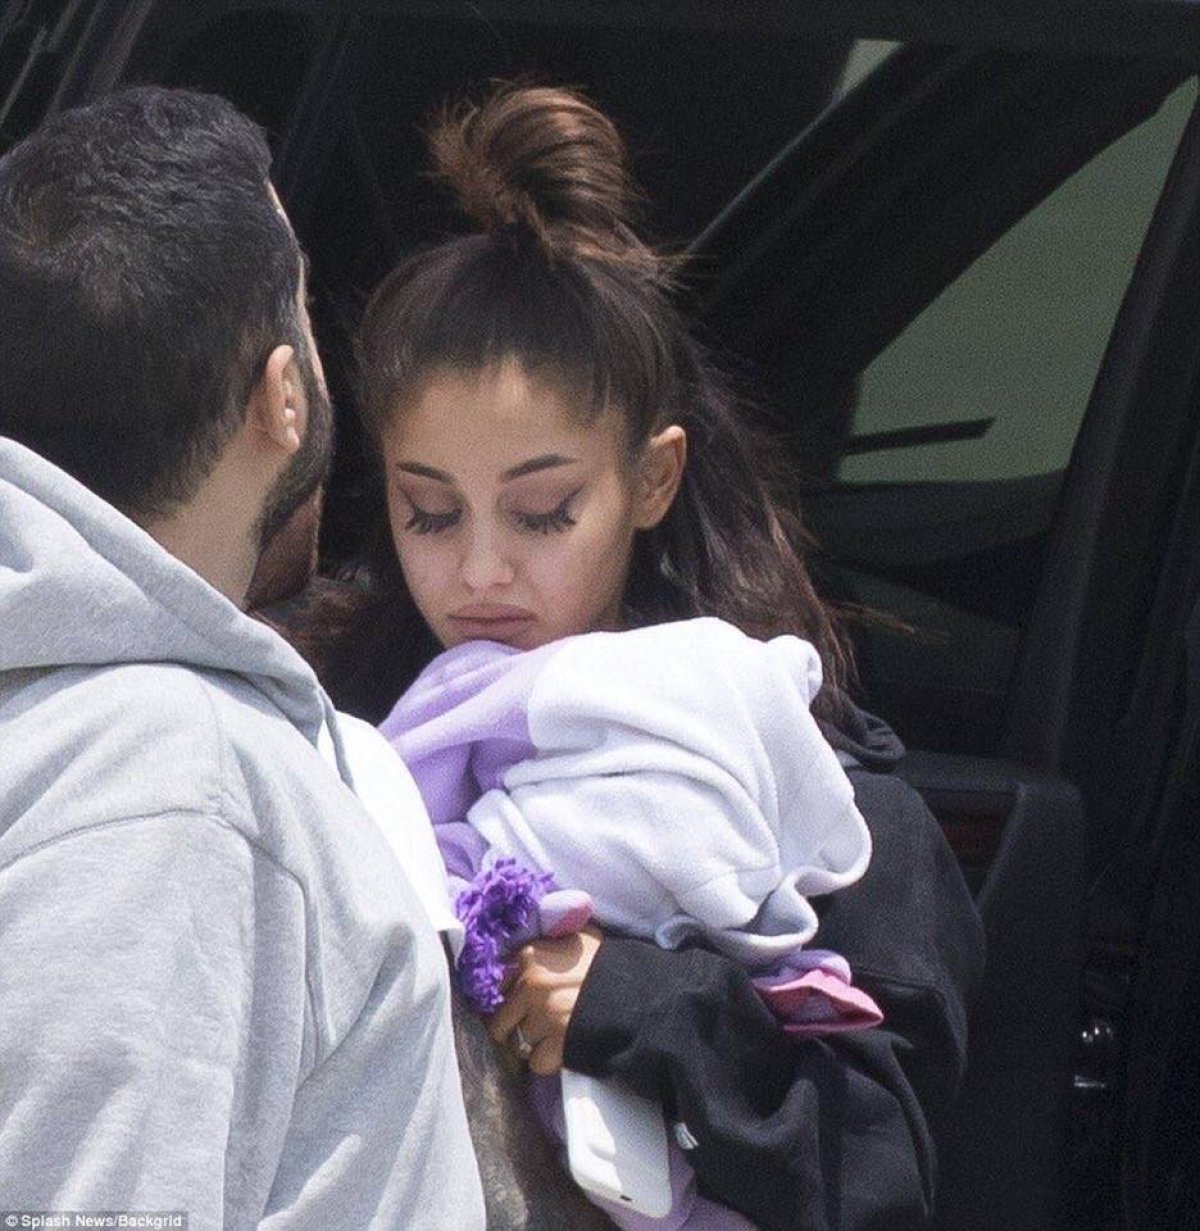 Revelan imágenes de Ariana Grande tras tragedia en Manchester